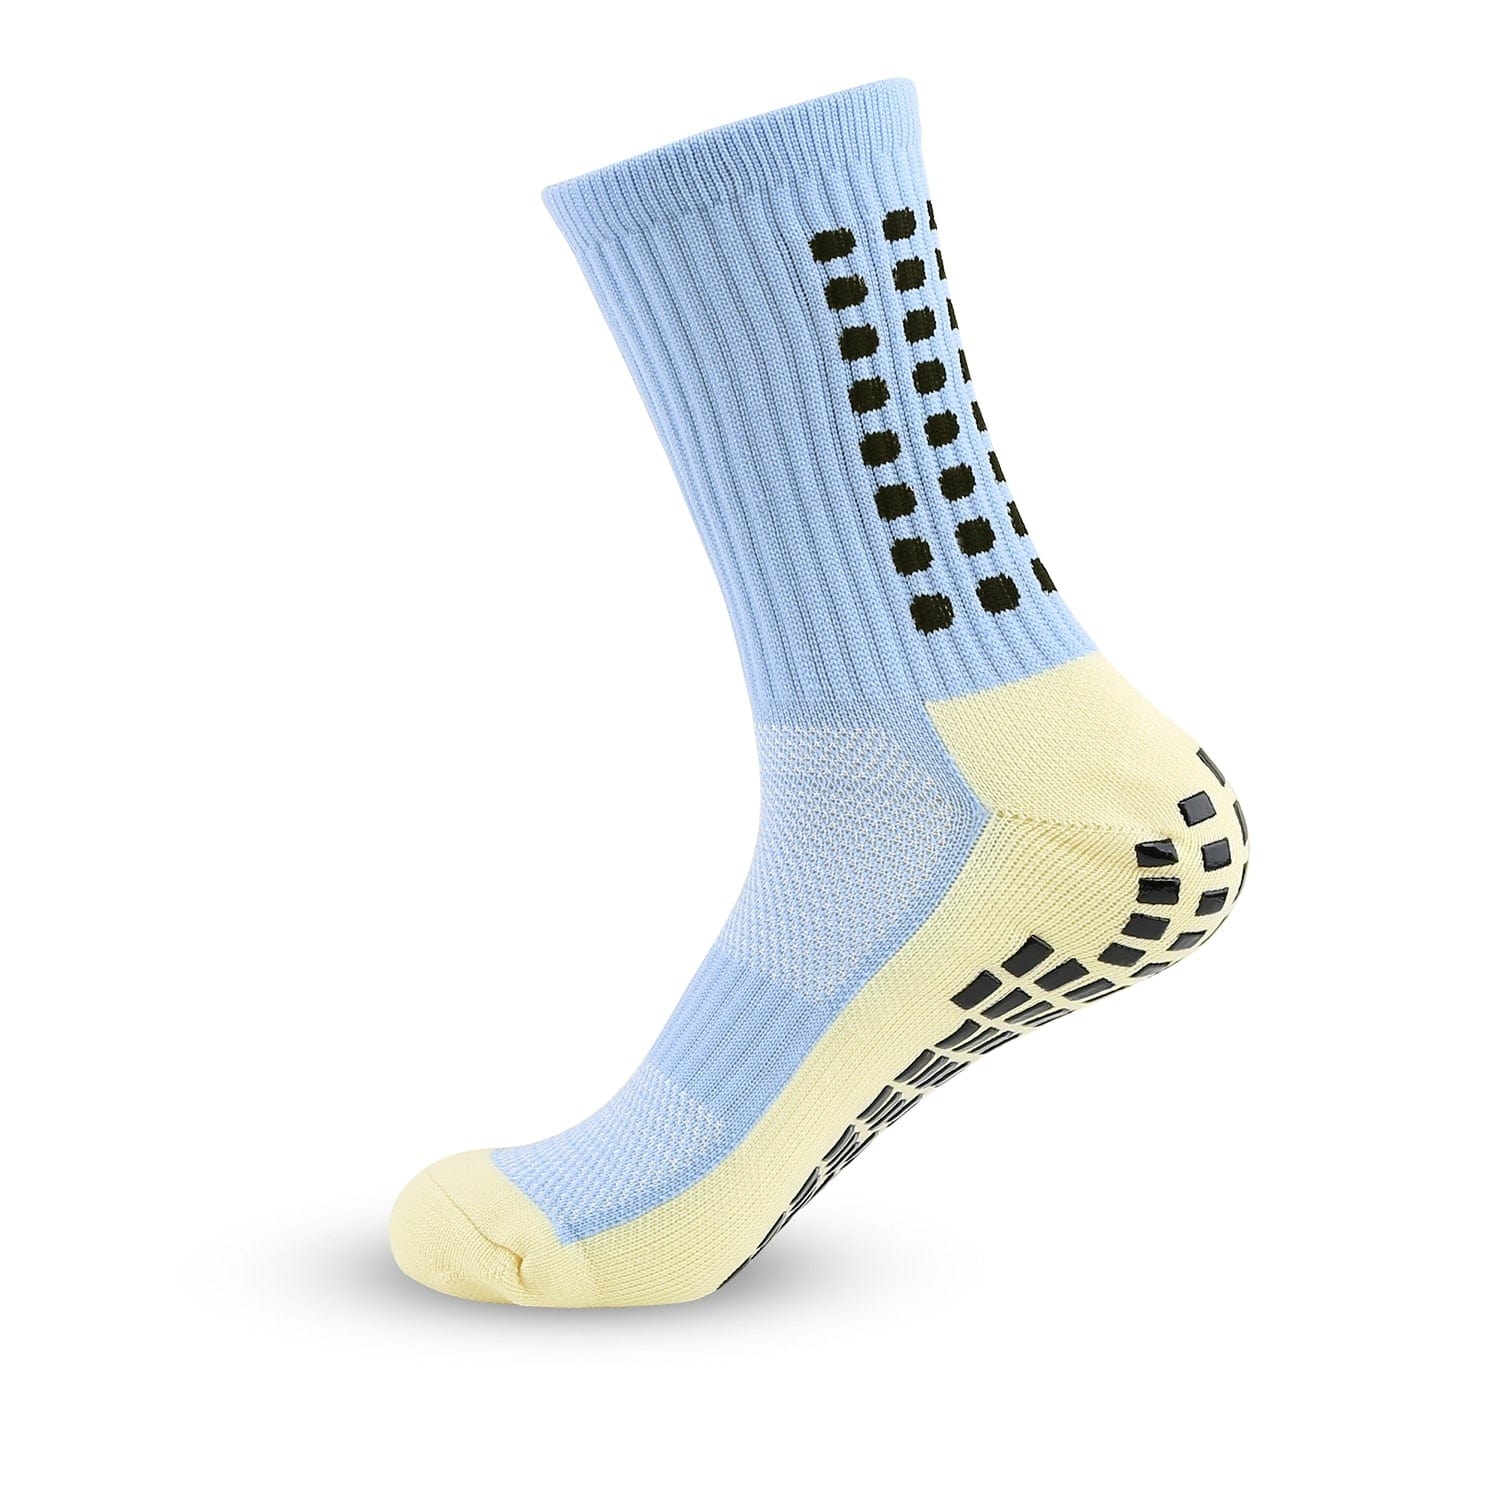 My Socks Bleu Ciel / 39-45 Chaussette Antidérapante Foot